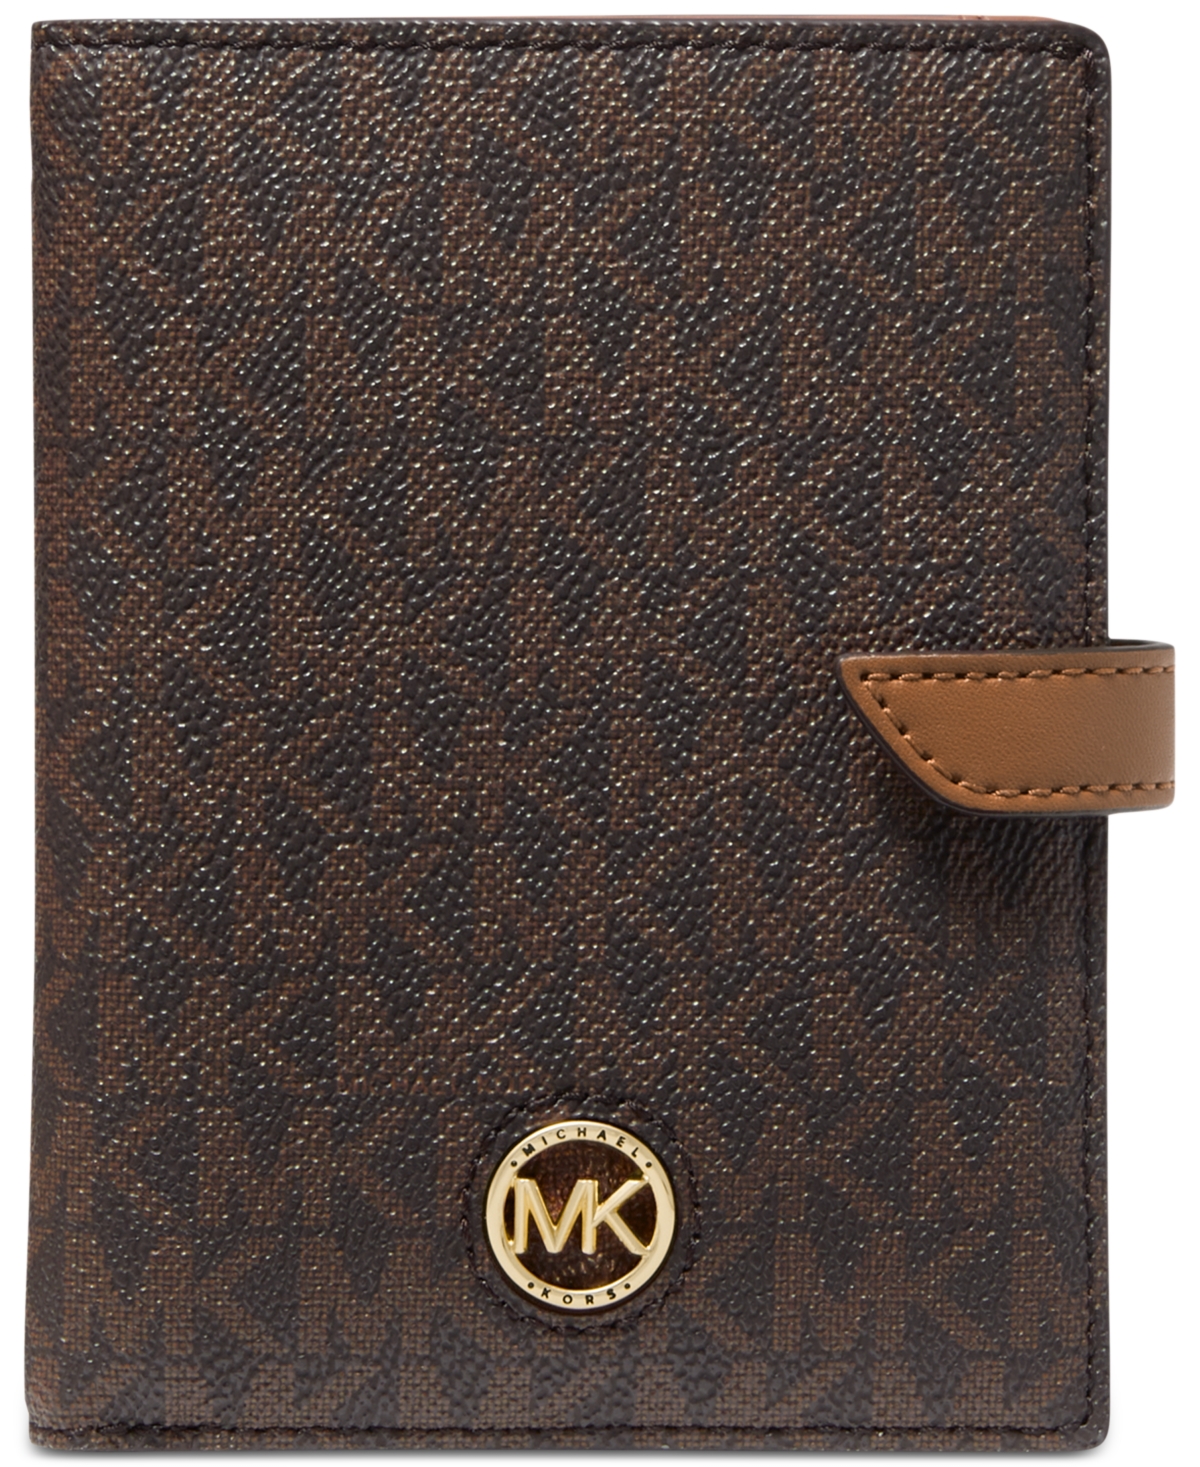 Michael Kors Passport Wallet DESIGNER Logo Brand New Brown Tan